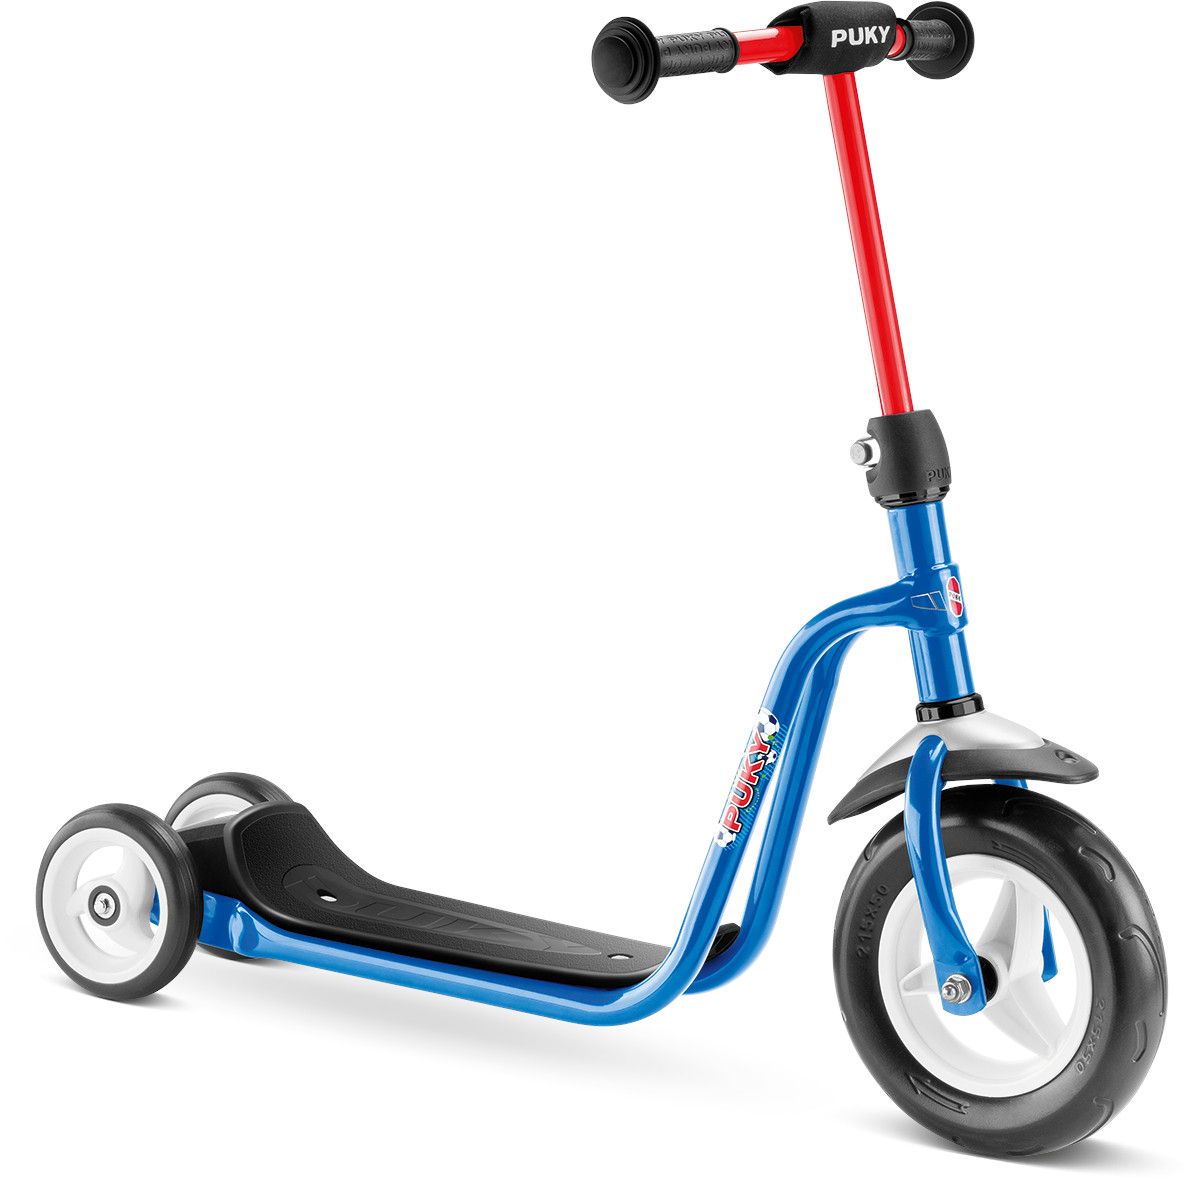 Puky Roller R 1 himmelblau - Fahrrad Online Shop